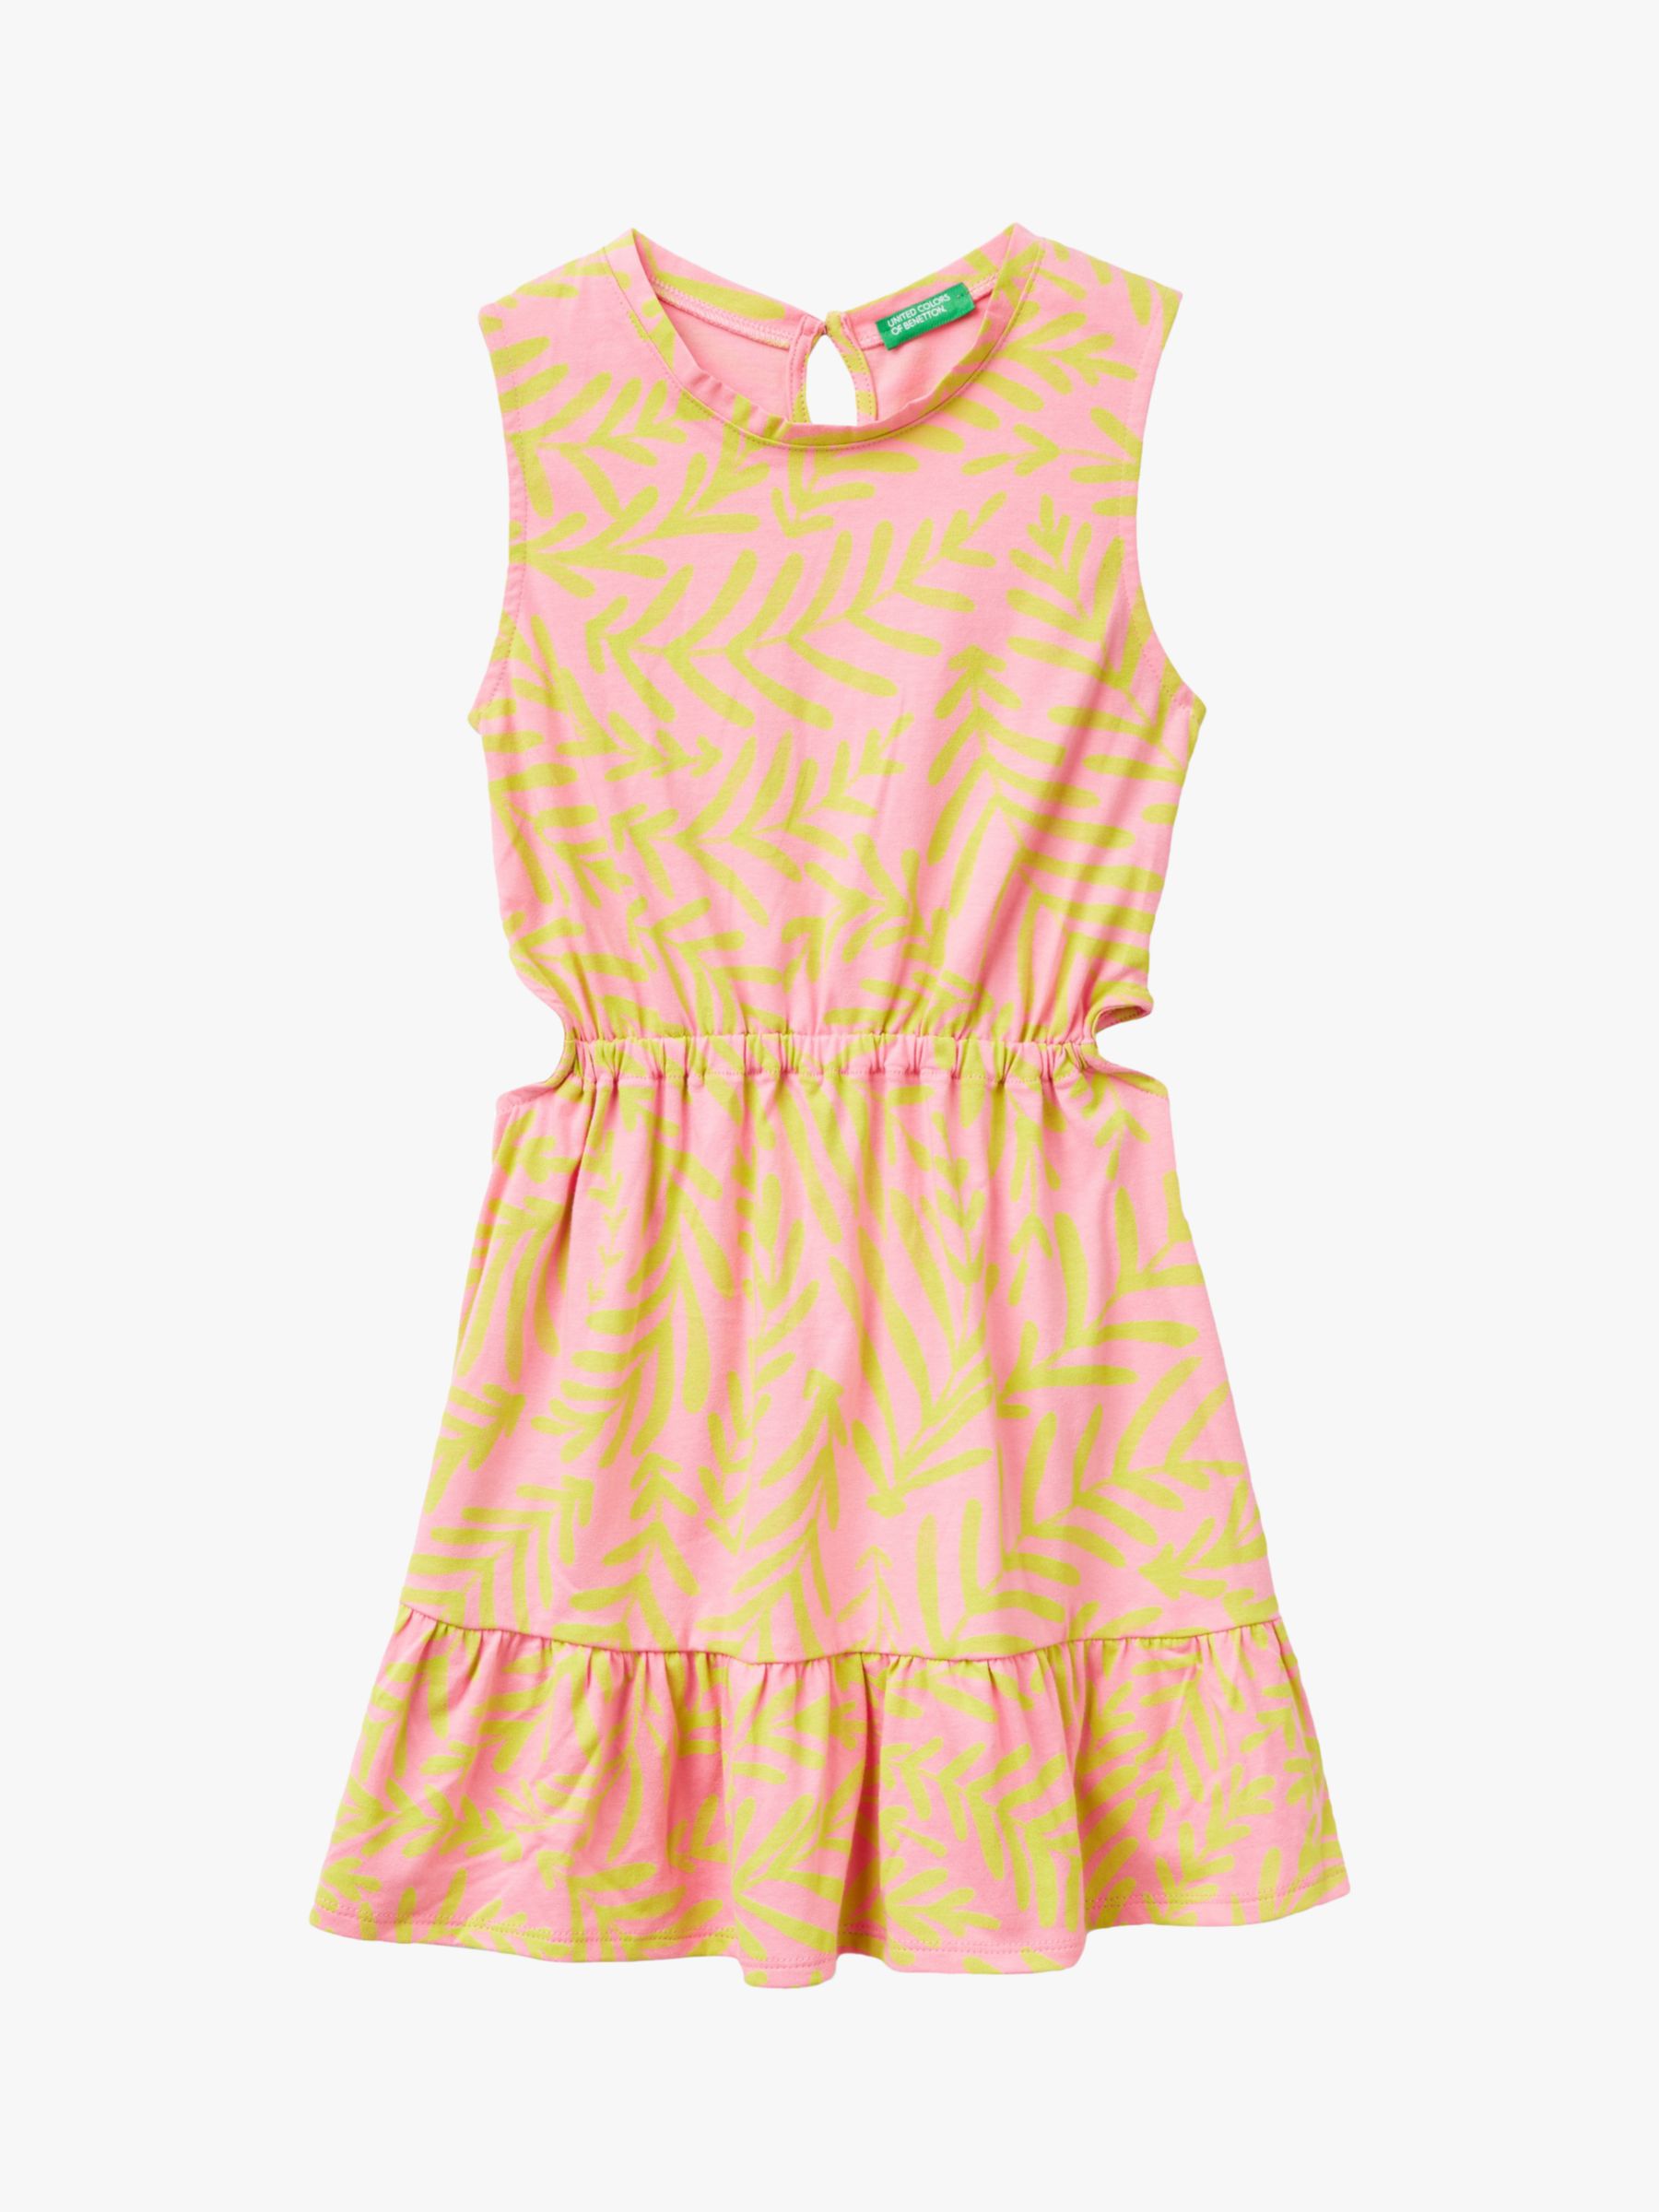 Benetton Kids' Cotton Sleeveless Keyhole Dress, Multicolor, 6-7 years